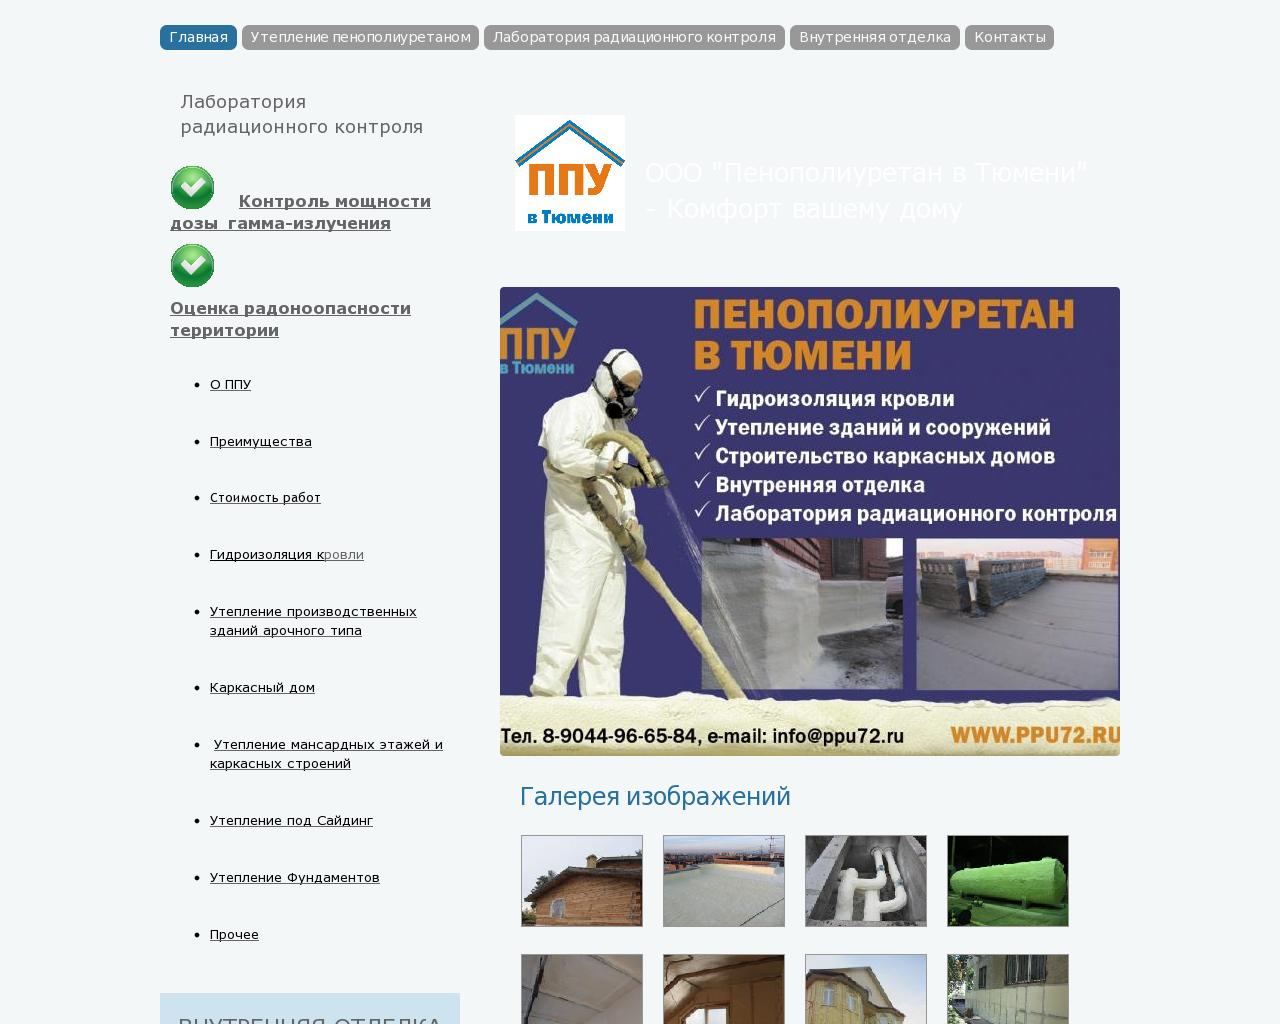 Изображение сайта ppu72.ru в разрешении 1280x1024